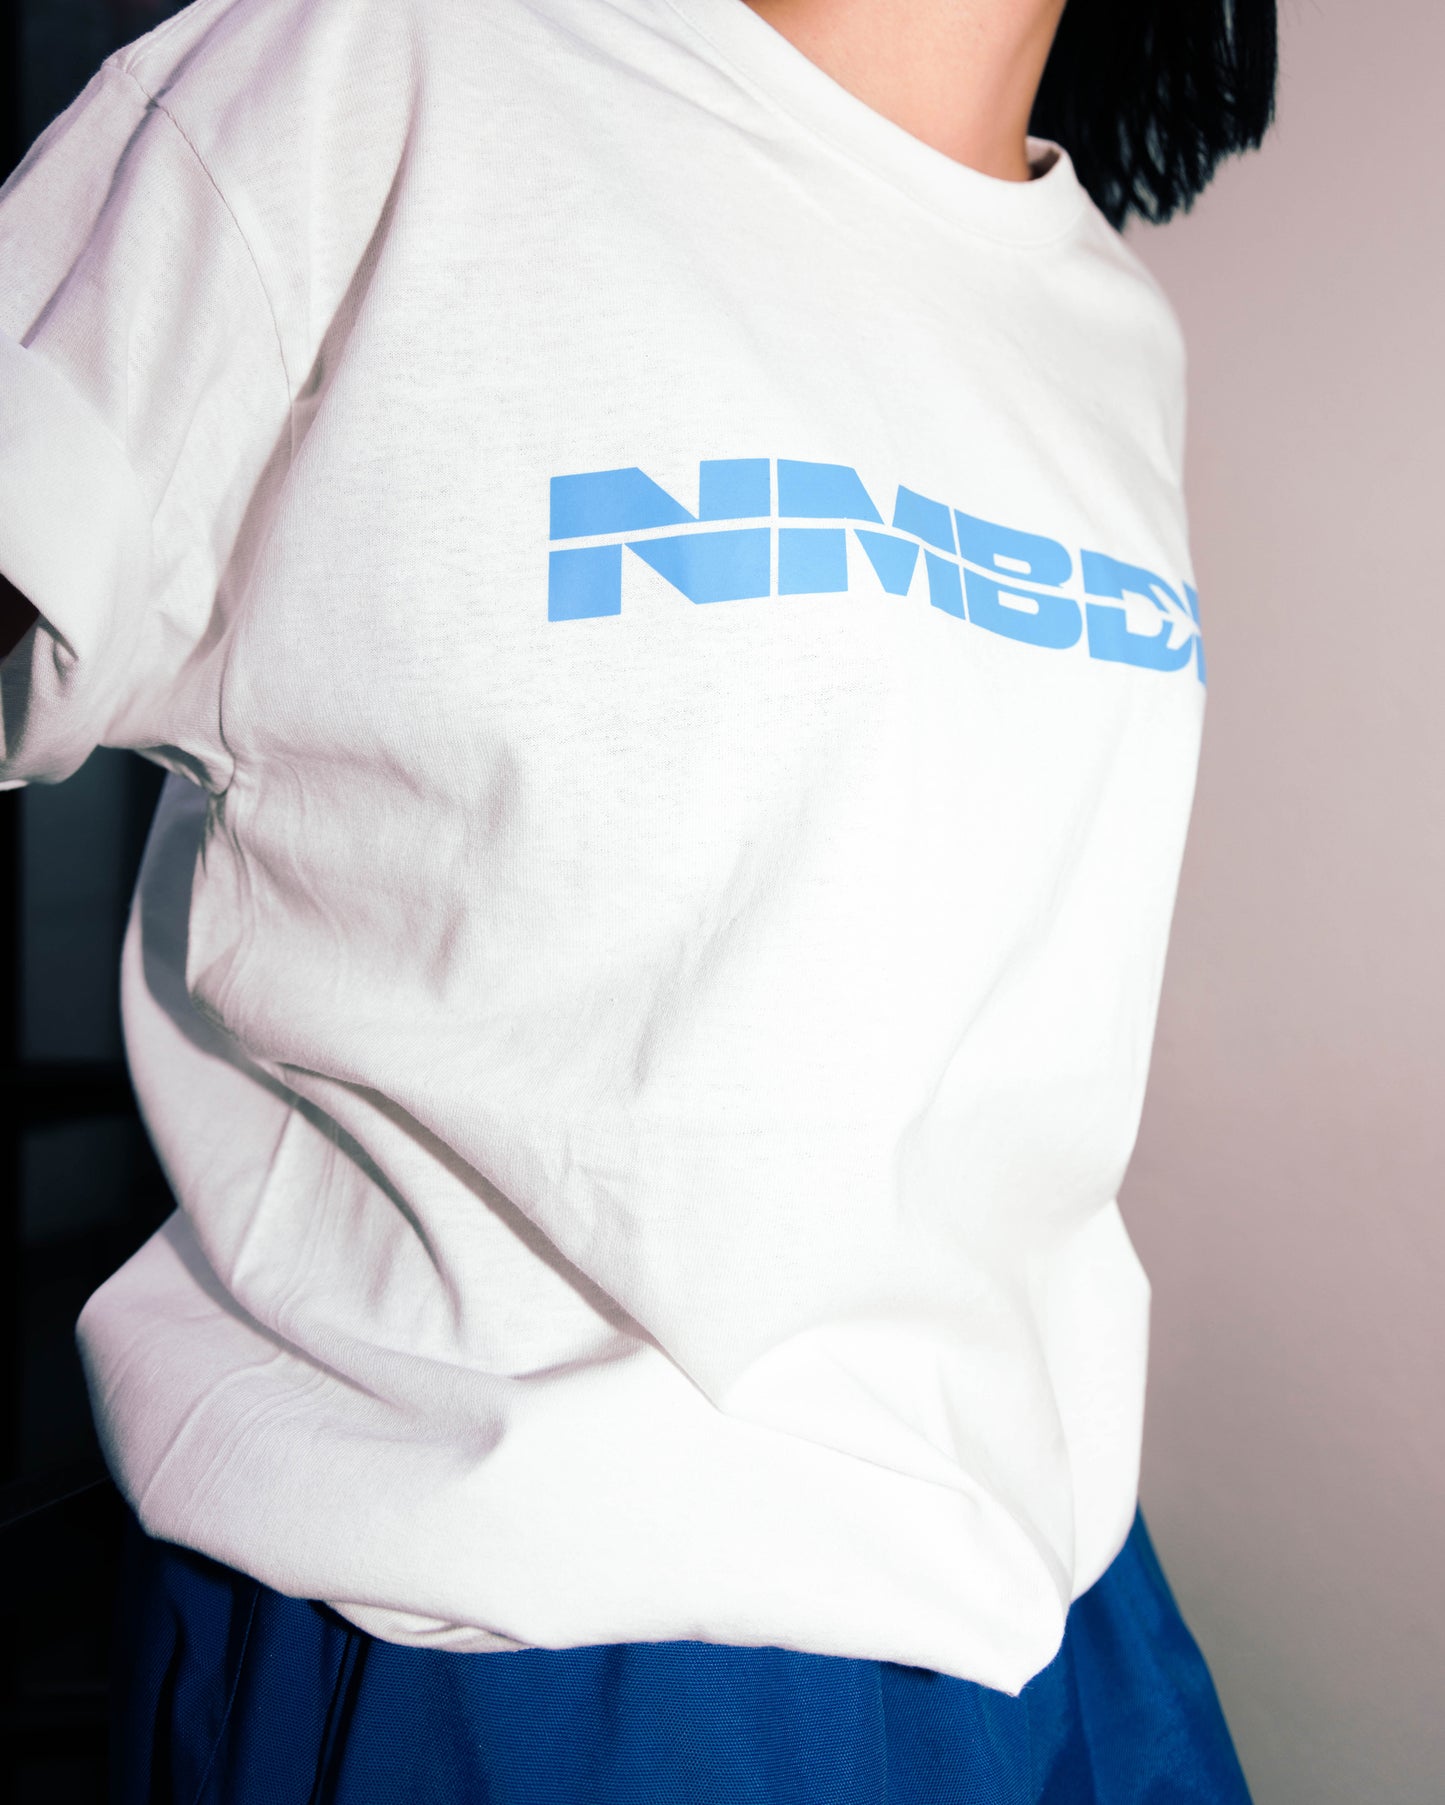 "NMBDM" Camiseta Unisex Fitting - Blanca